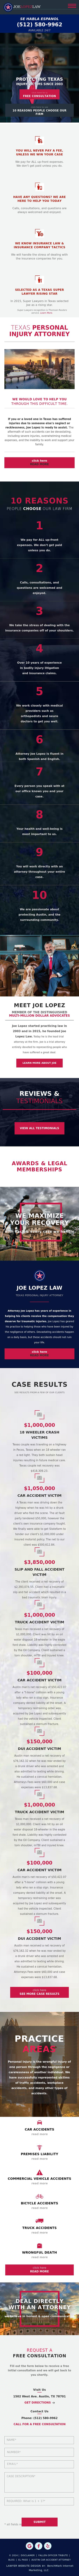 The Lopez Law Firm - Austin TX Lawyers